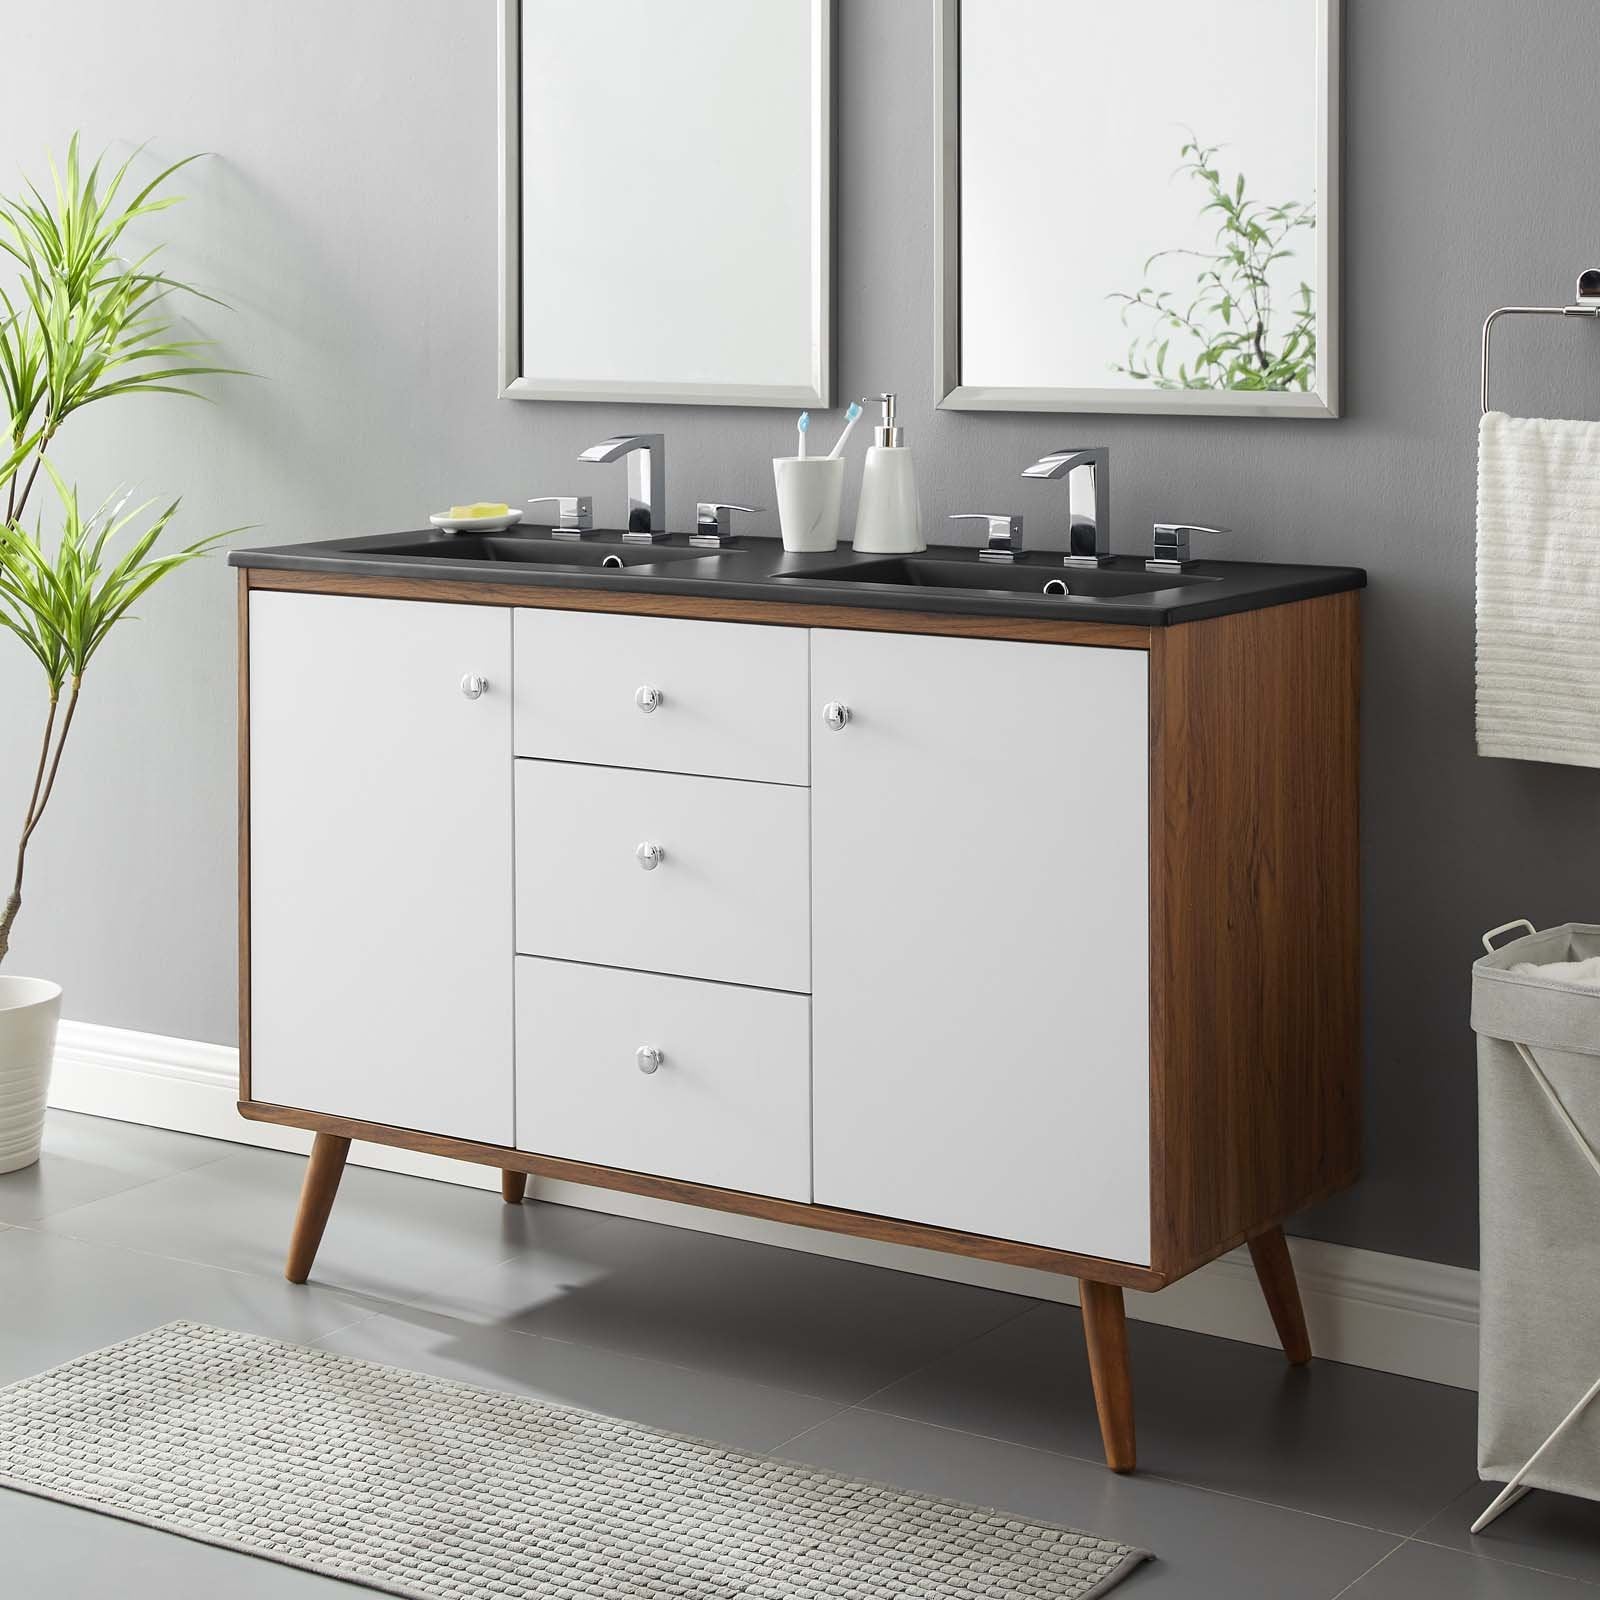 Transmit 48" Double Sink Bathroom Vanity - East Shore Modern Home Furnishings